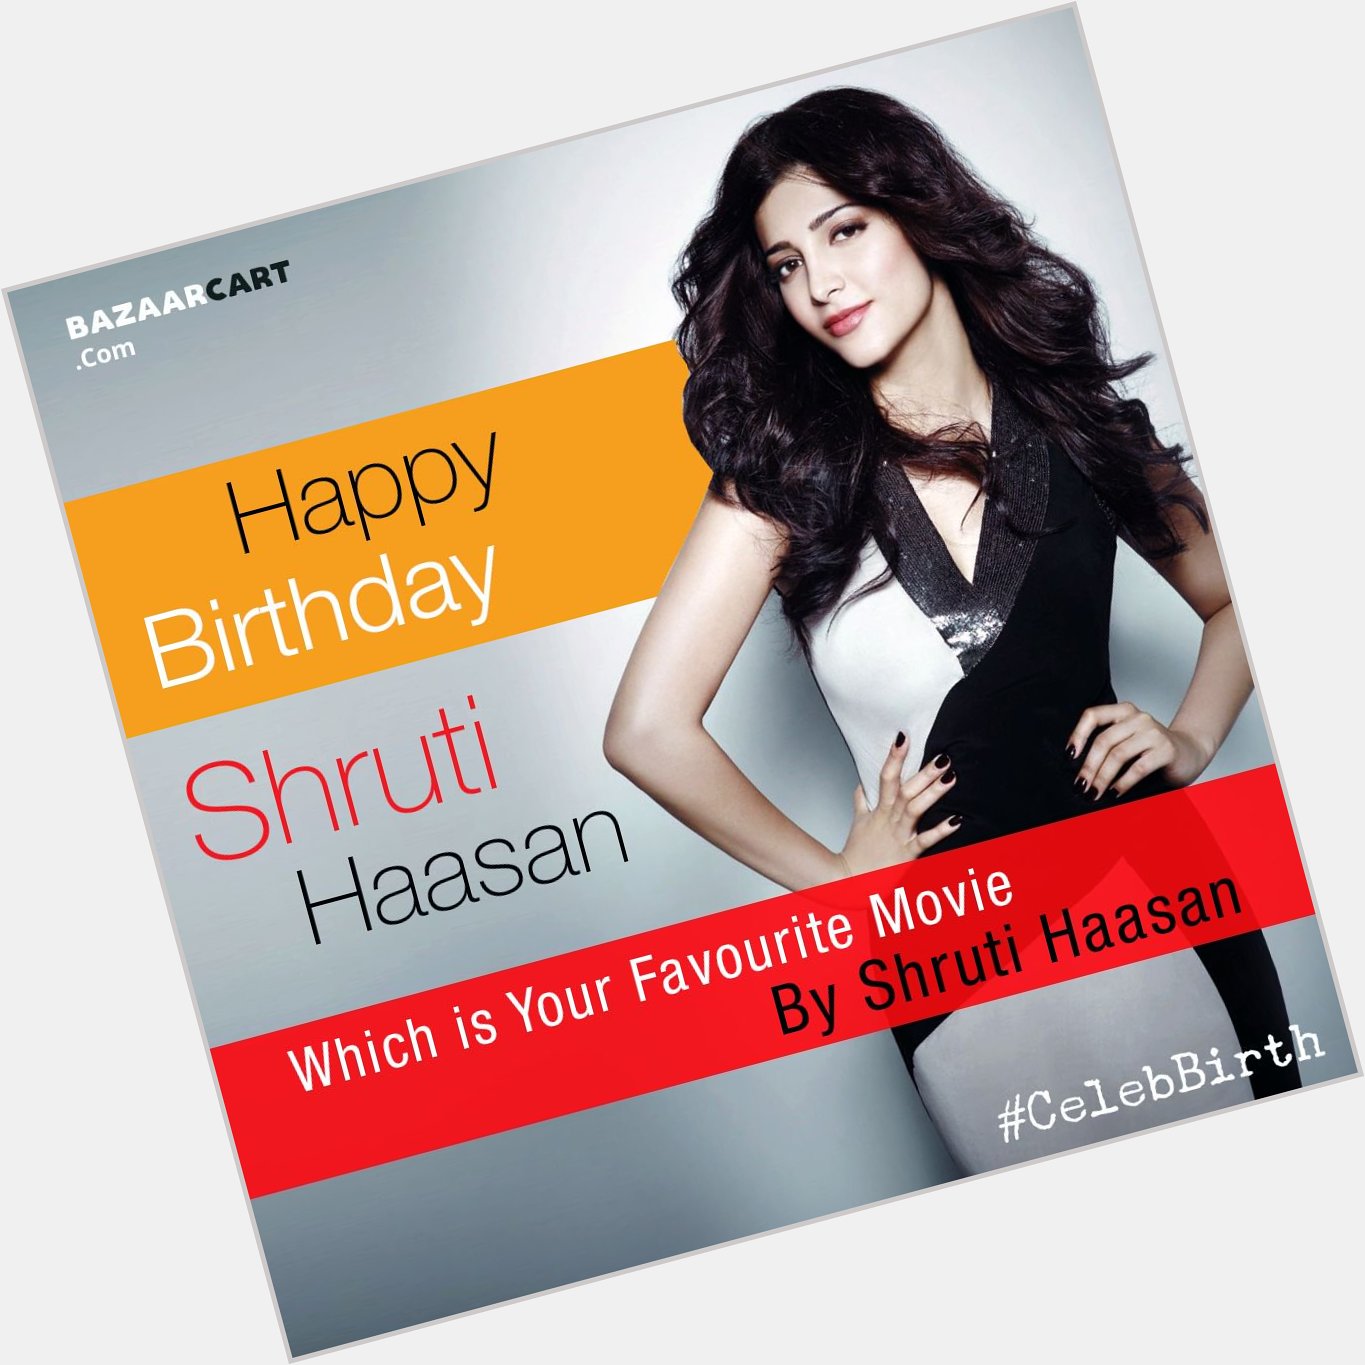 Happy Birthday Shruti Haasan
Name Your Favourite Movie by Shruti Haasan ?  